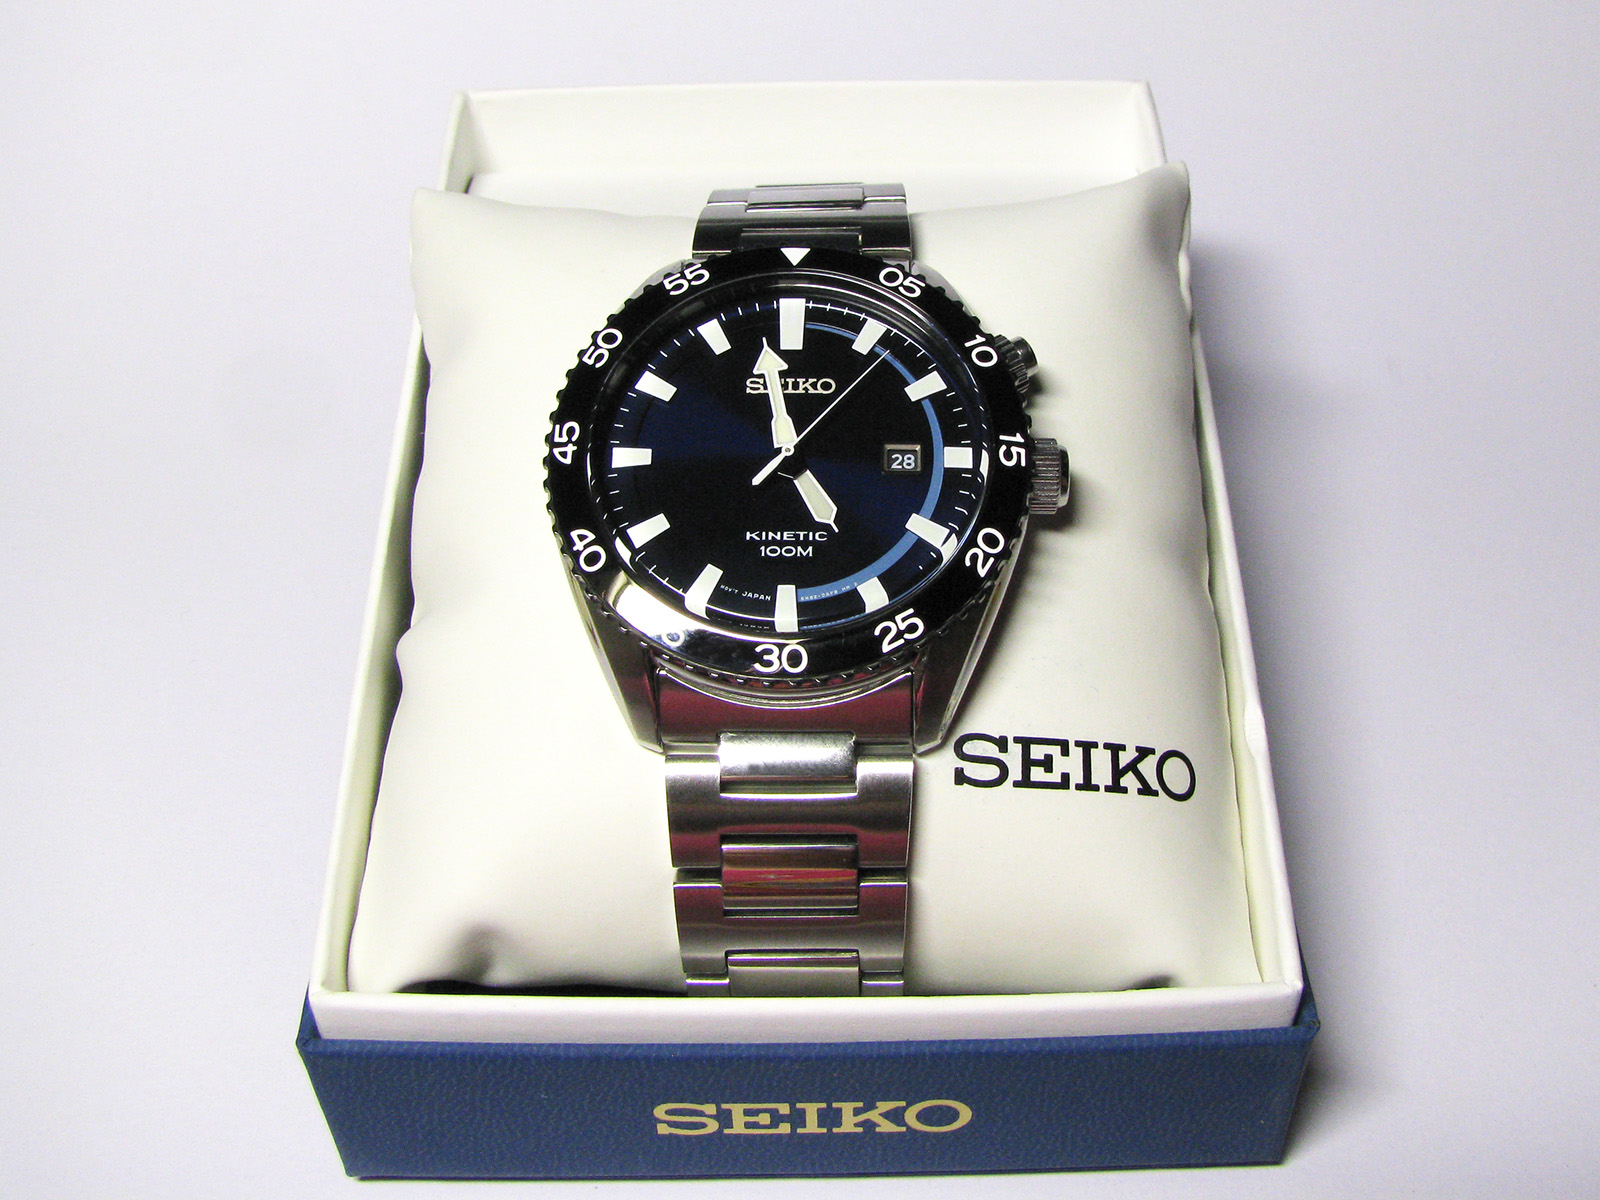 Seiko SKA623 Kinetic Dress Watch ⋆ High Quality Watch Gallery